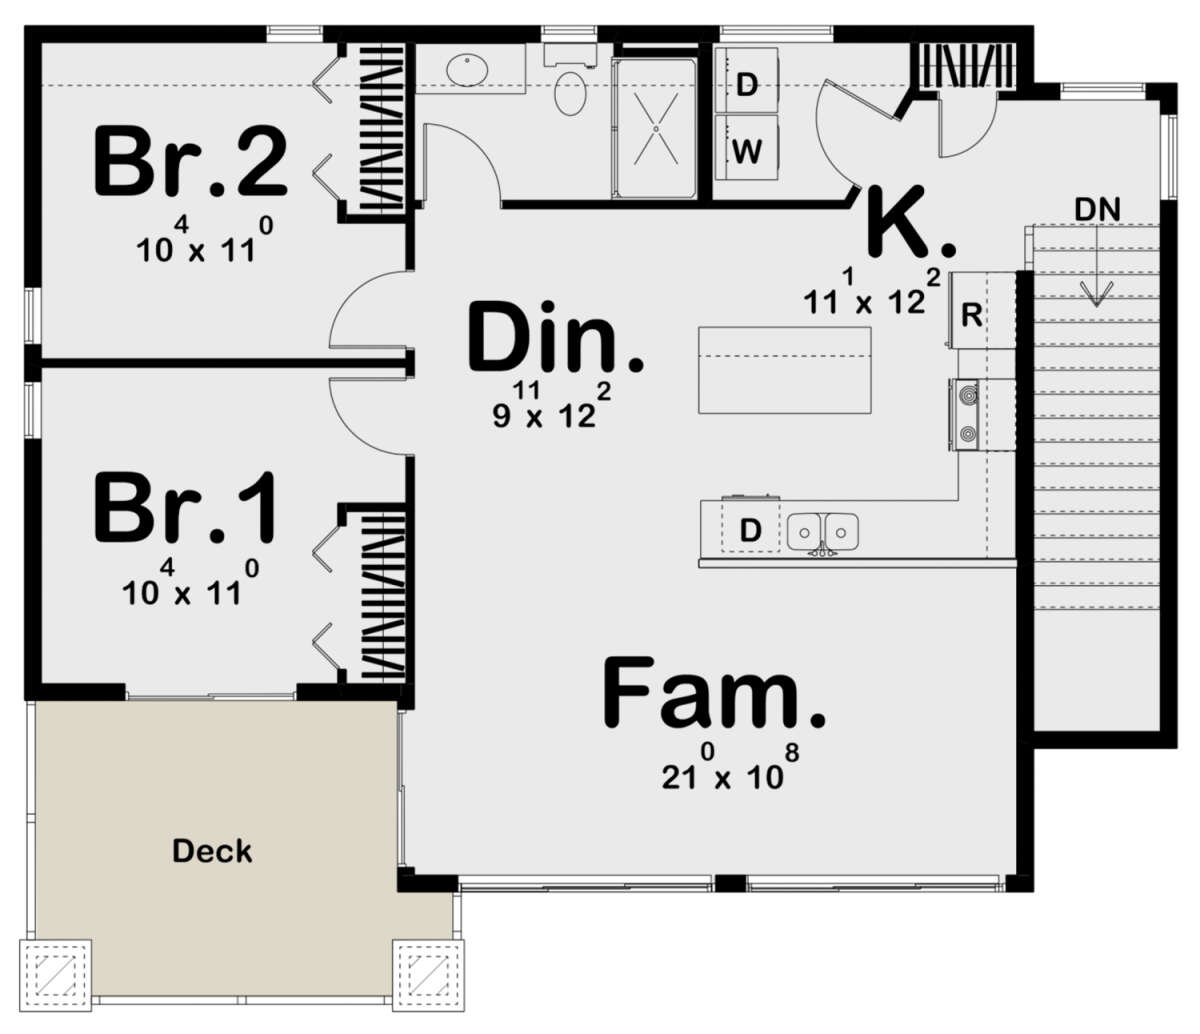 1161 s/f Prefabricated 2 BR 2 BA Home Building Plan 